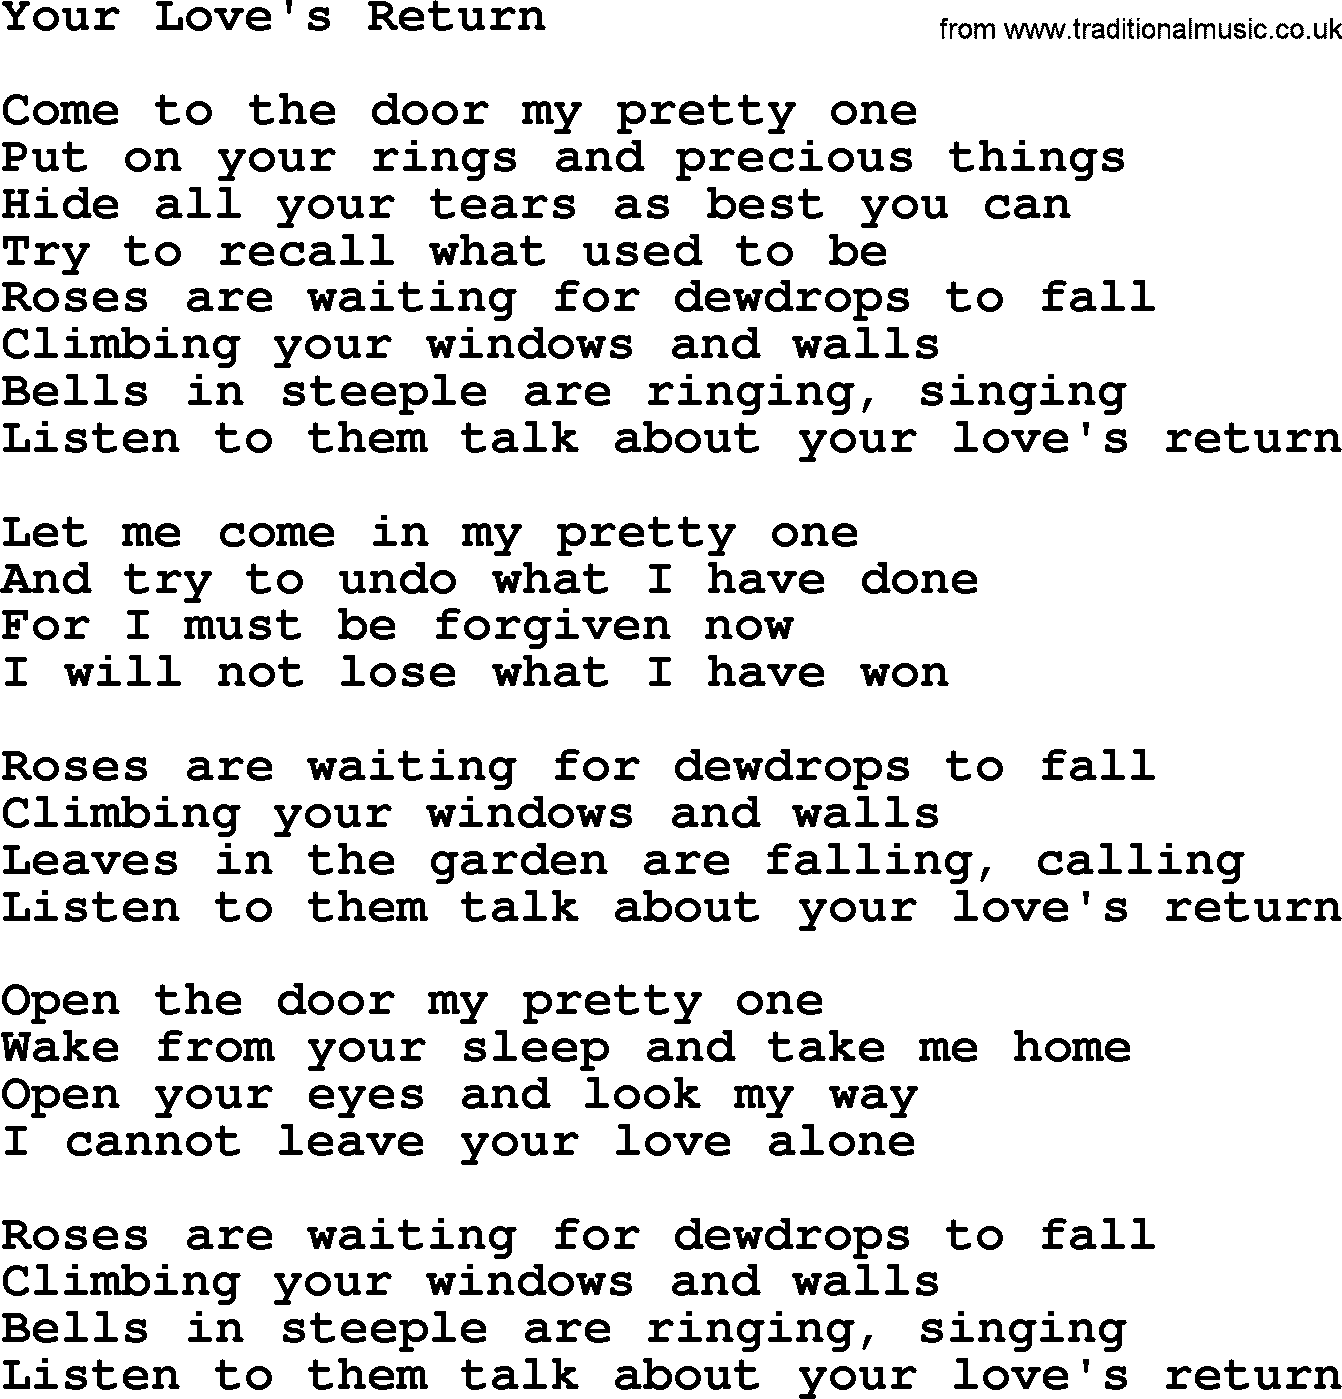 Gordon Lightfoot song Your Love's Return, lyrics